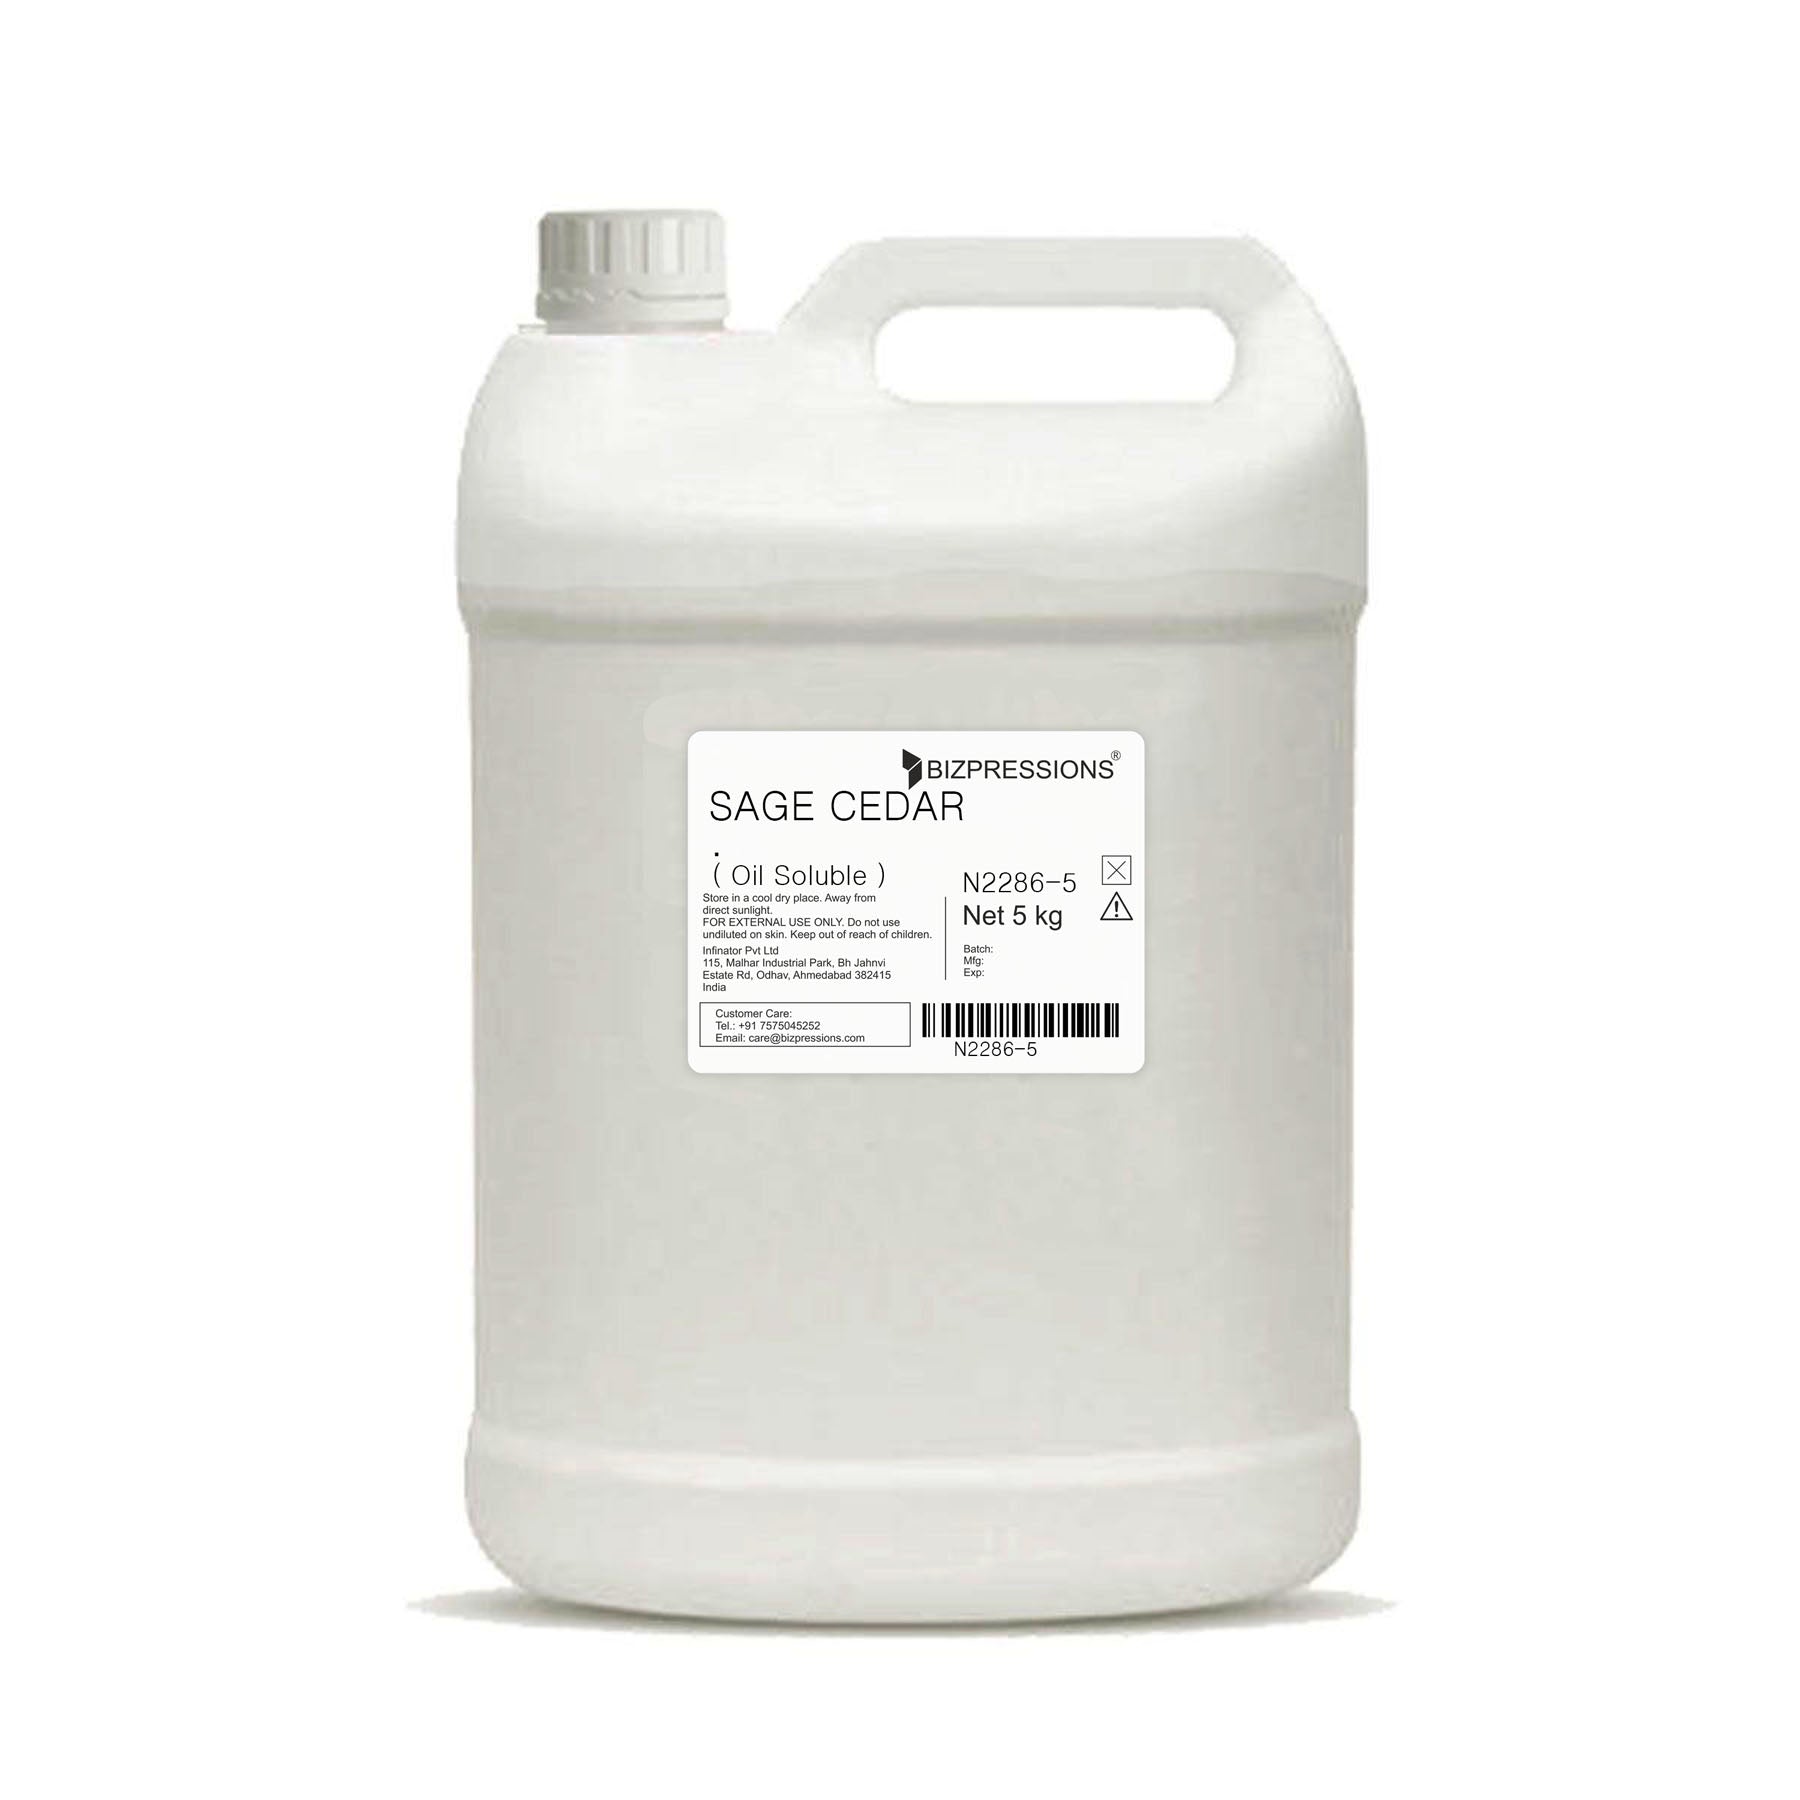 SAGE CEDAR - Fragrance ( Oil Soluble ) - 5 kg